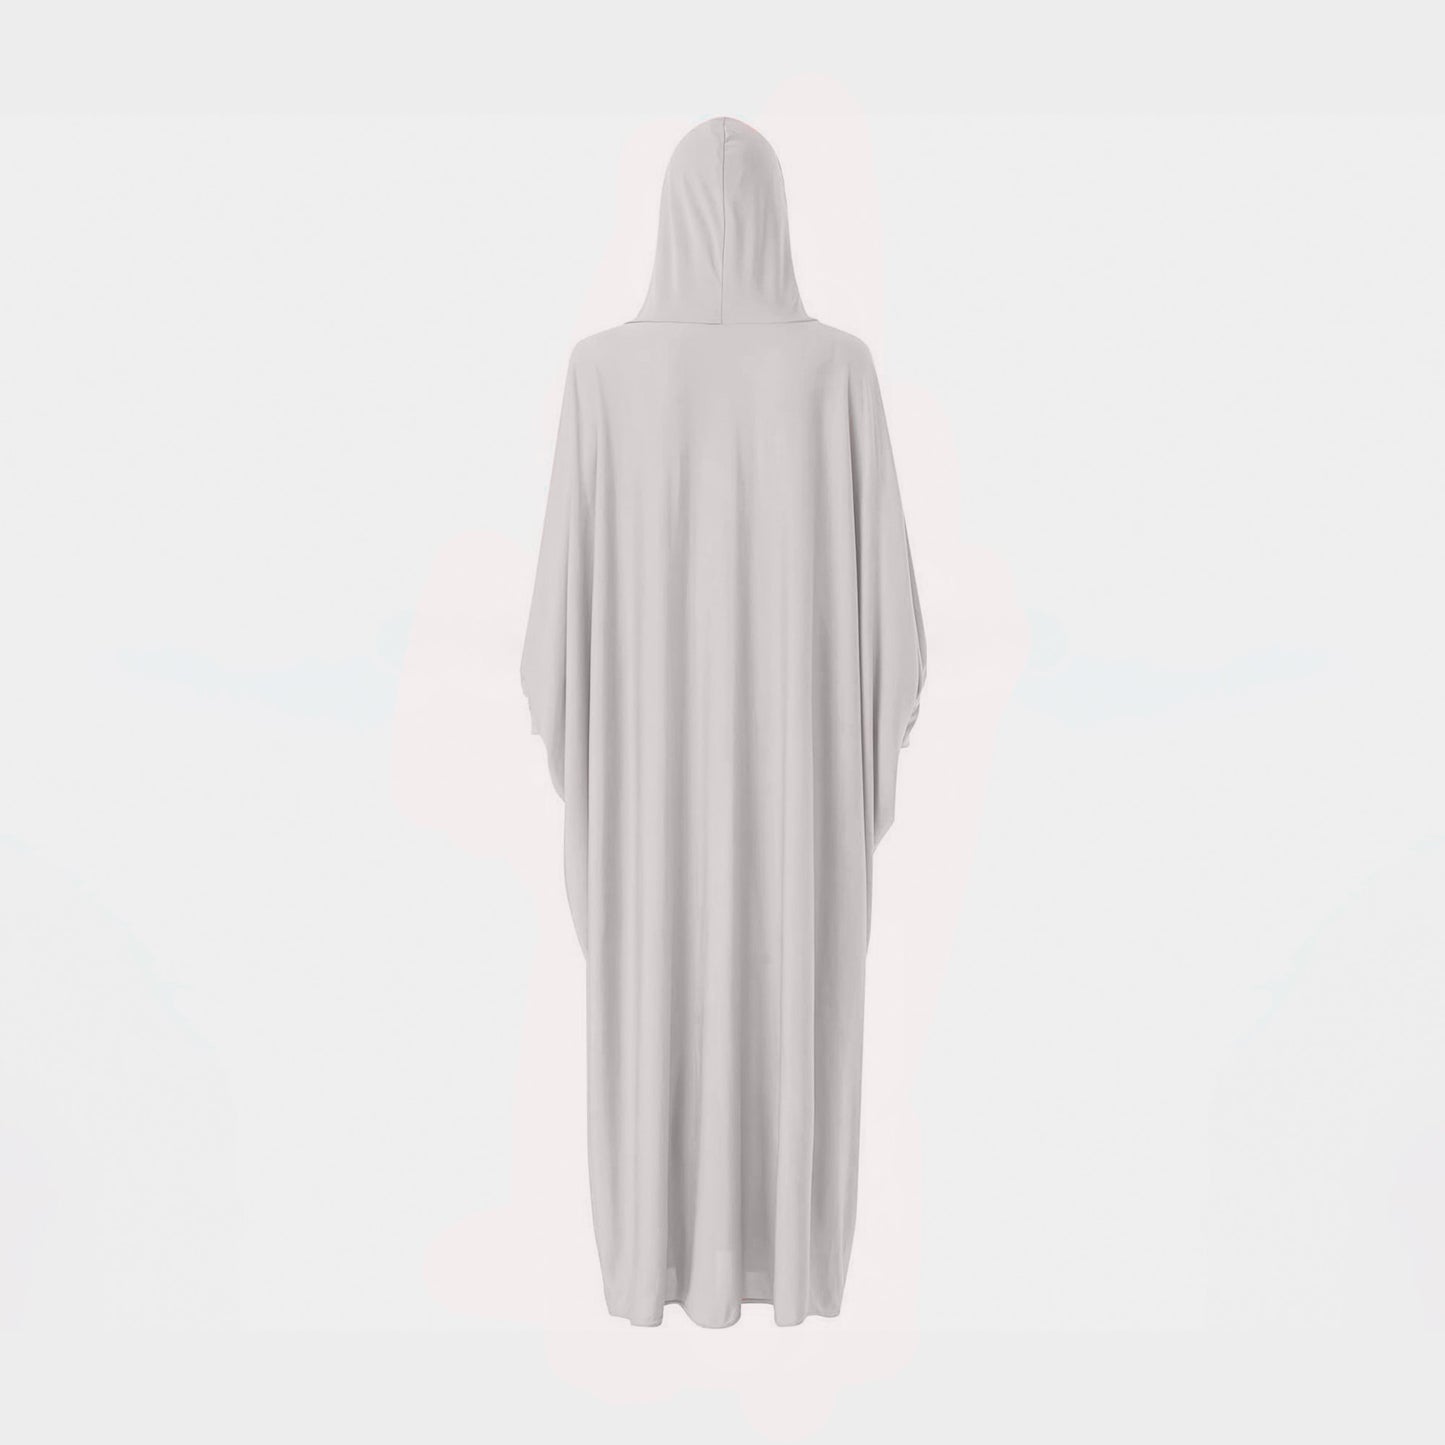 Abaya de Oración - Gris